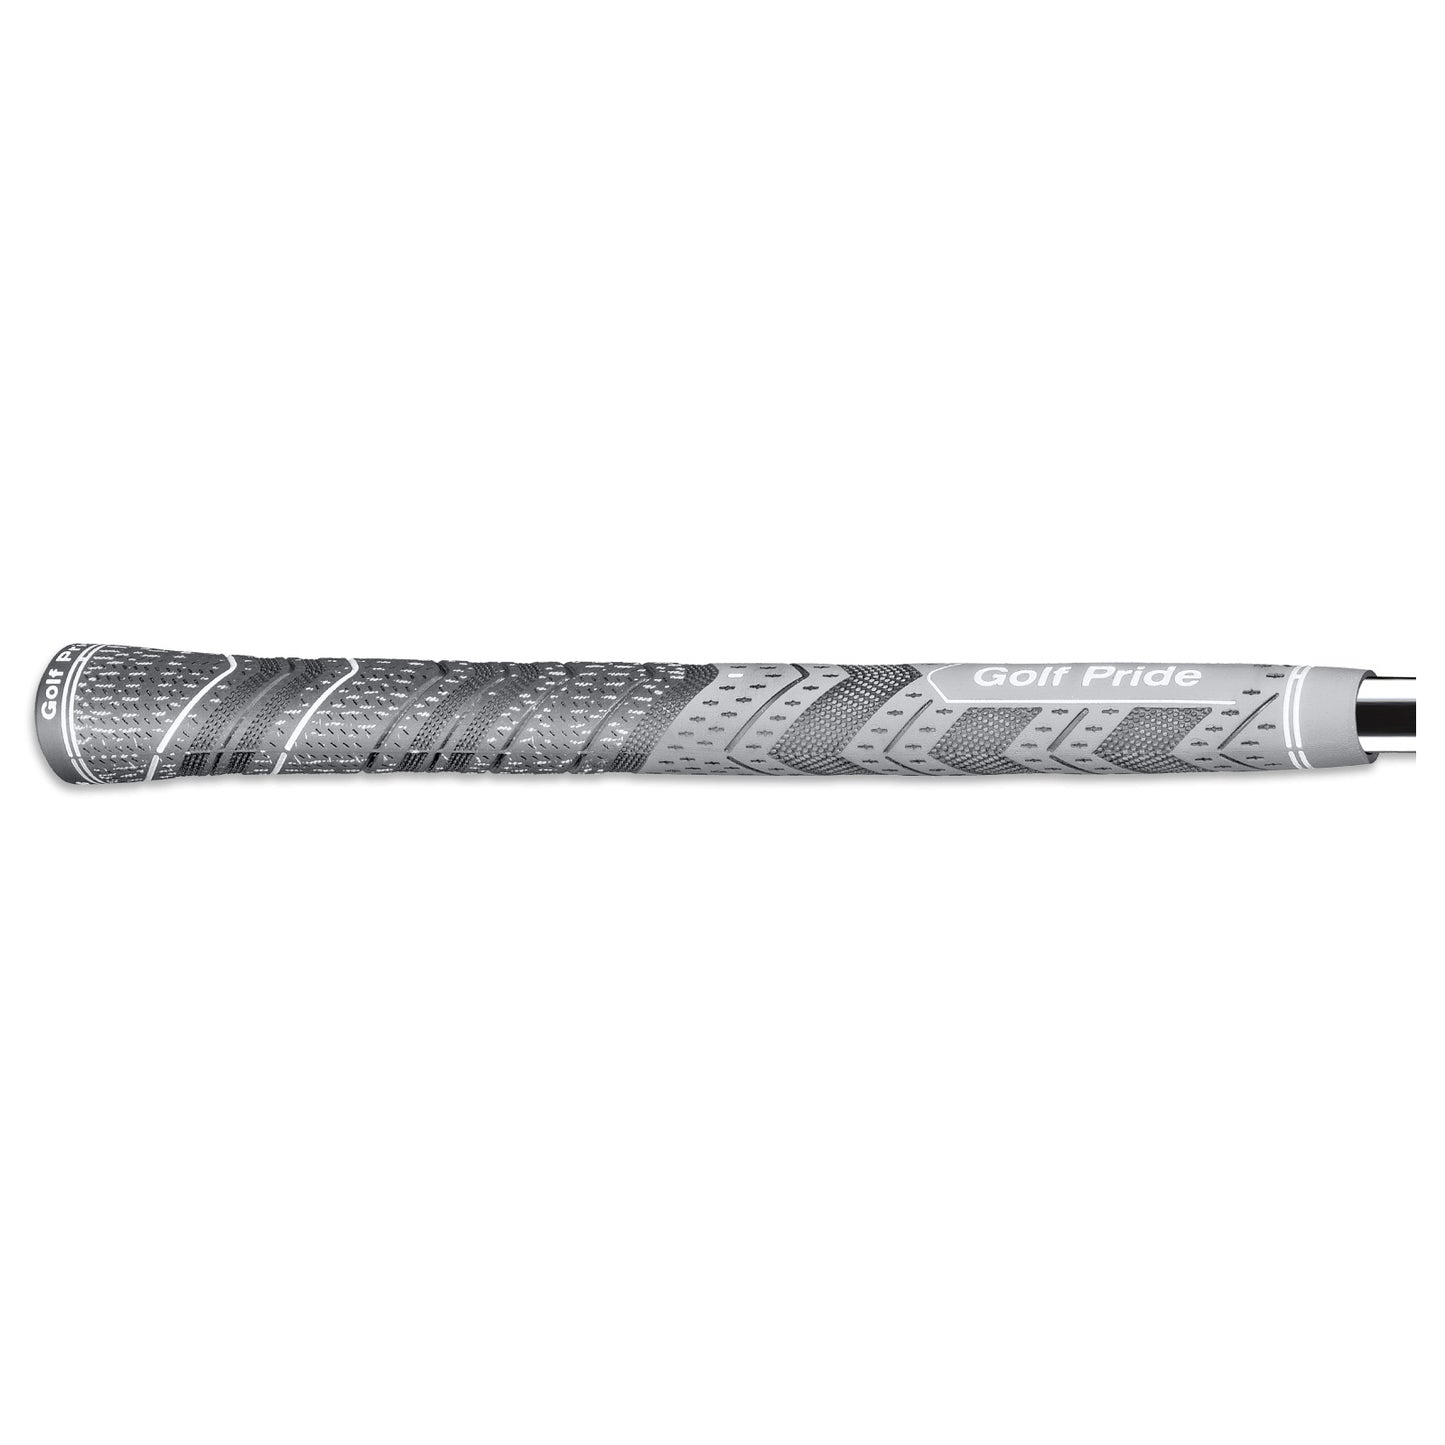 Golf Pride Multi Compound Cord Plus4 Club Grips - Grey